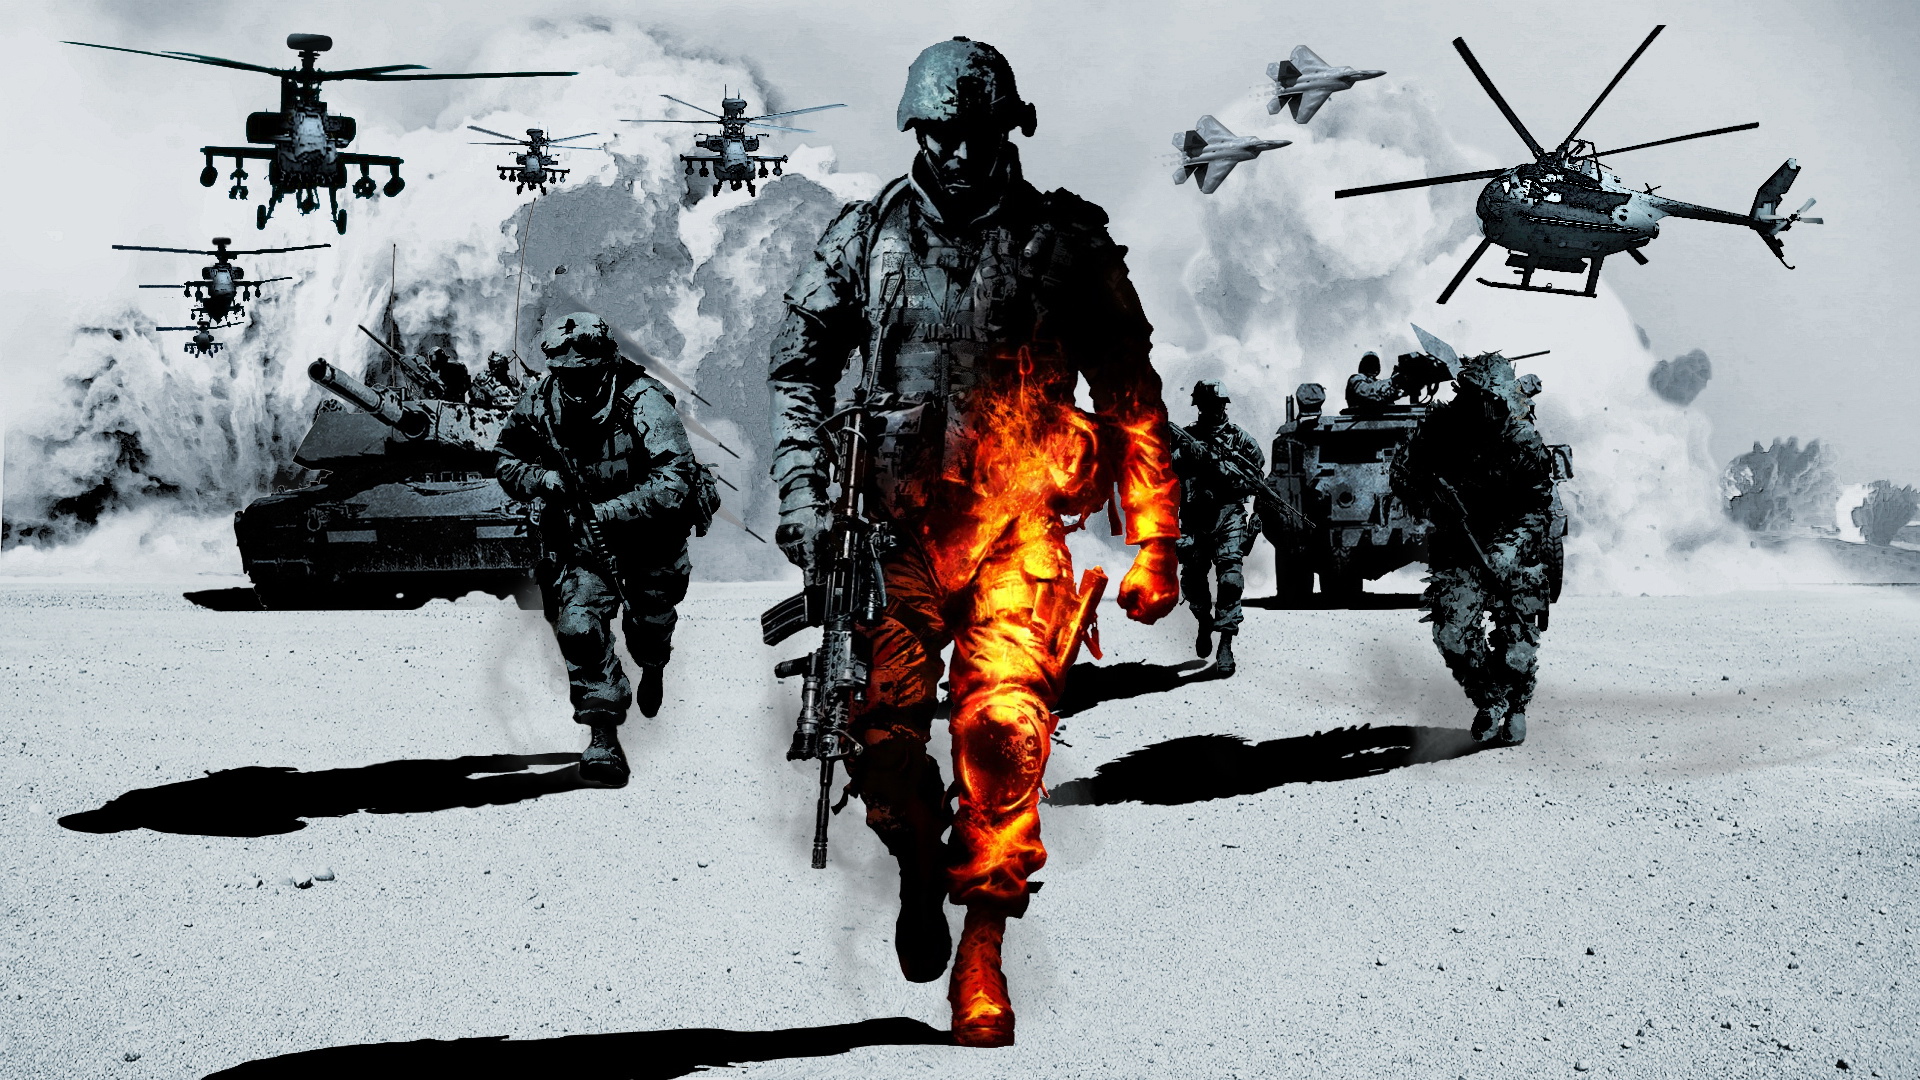 Battlefield 3 full hd, hdtv, fhd, 1080p wallpapers hd